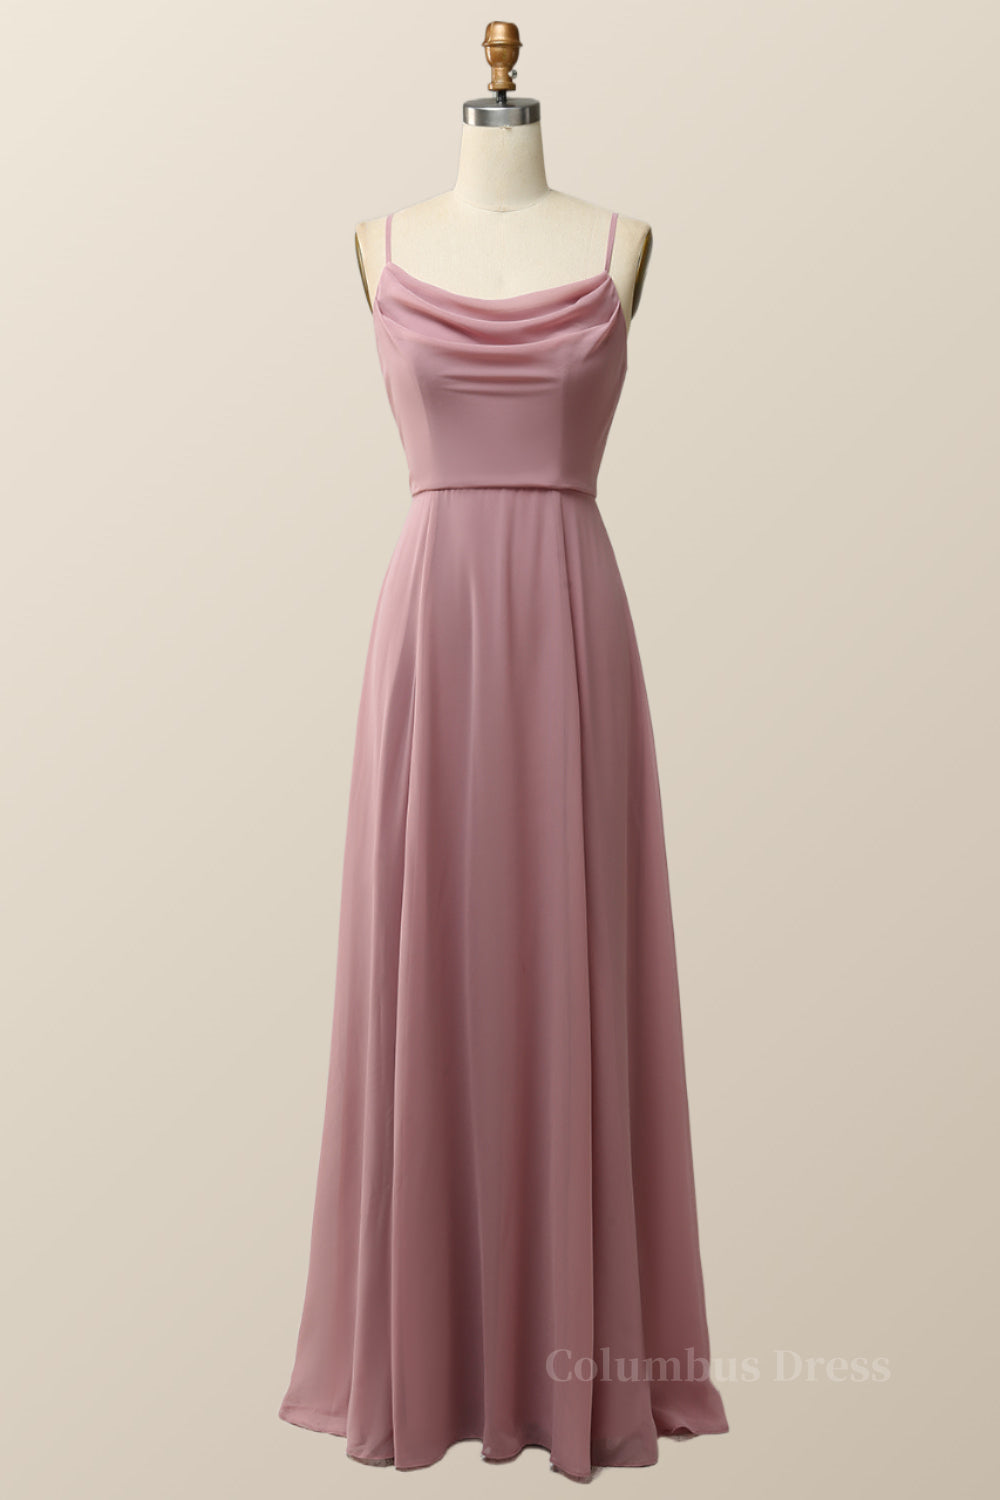 Blush Pink Cowl Neck Chiffon Long Corset Bridesmaid Dress outfit, Prom Dresses